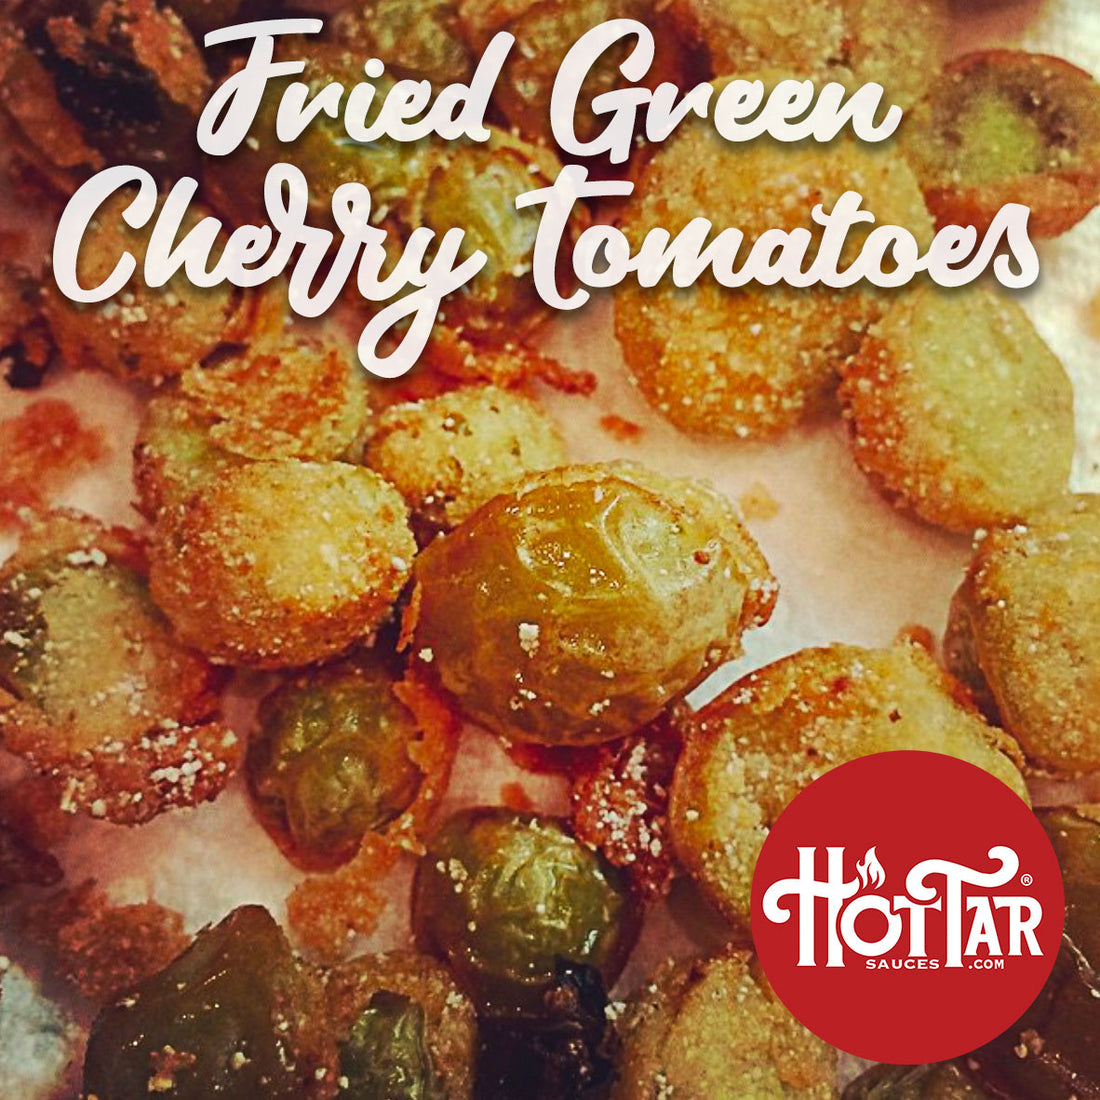 HOT TAR Fried Green Tomatoes Recipe